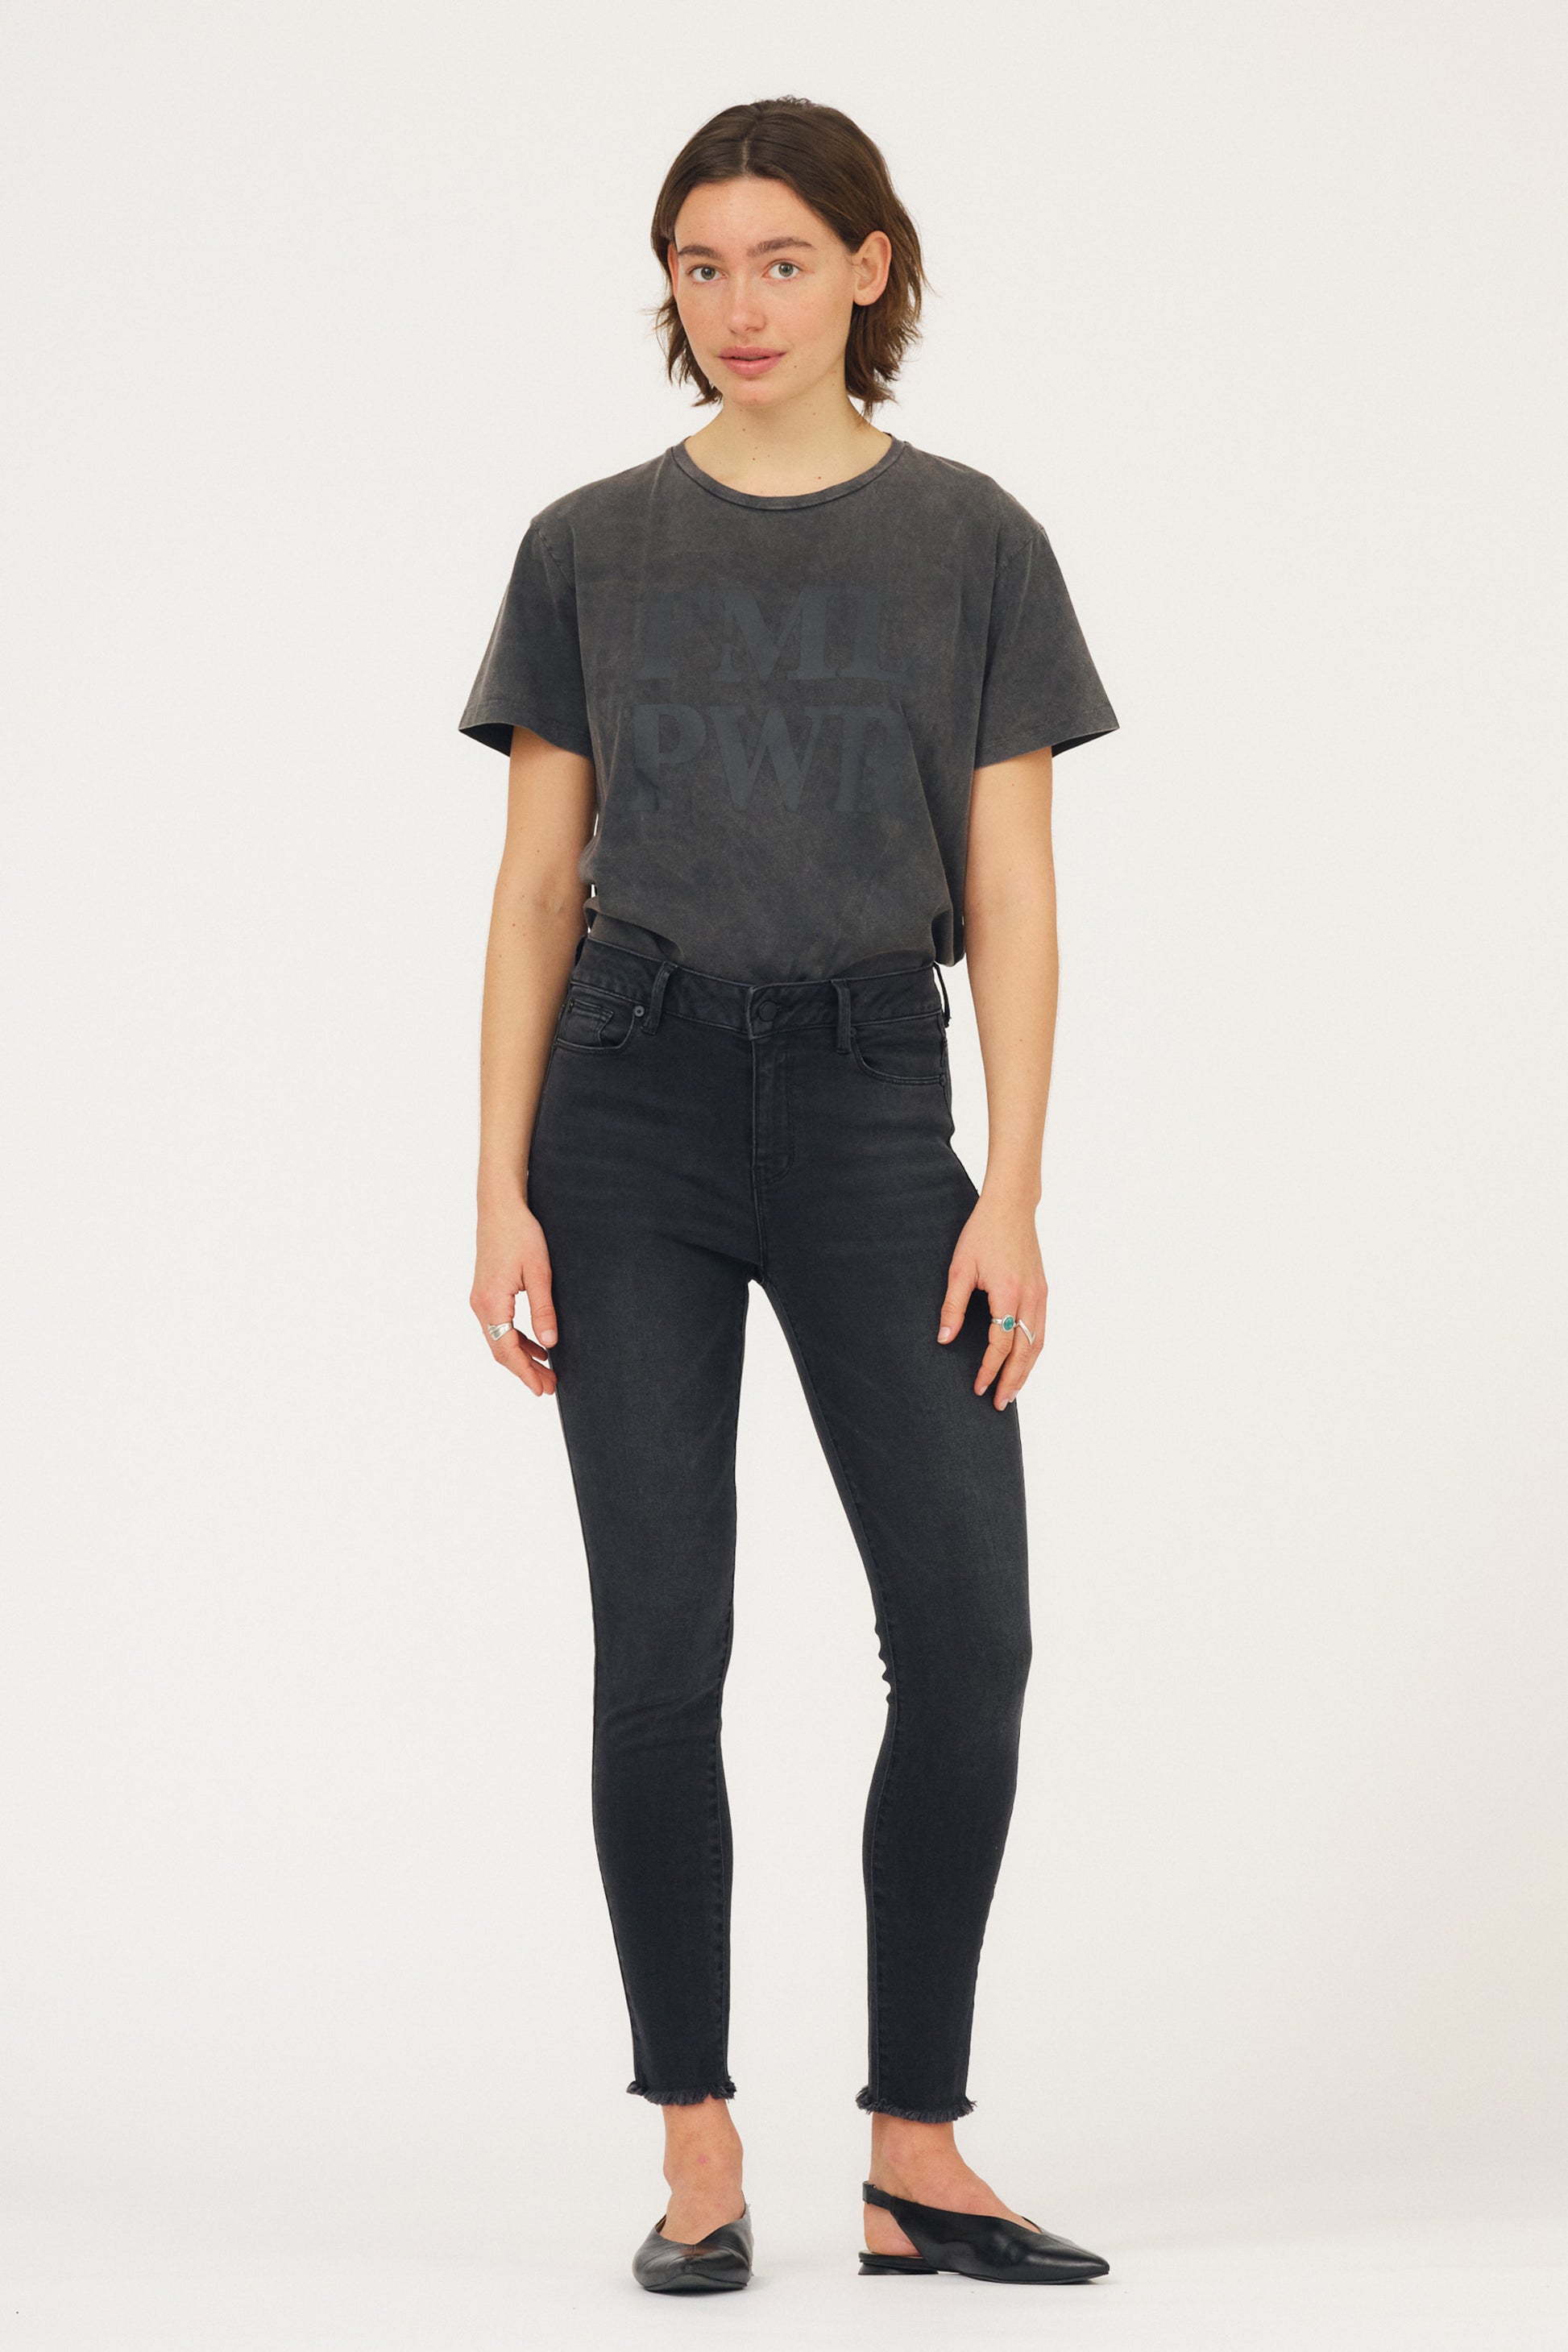 IVY Copenhagen IVY-Alexa Jeans Wash Bangkok Black Jeans & Pants 9 Black